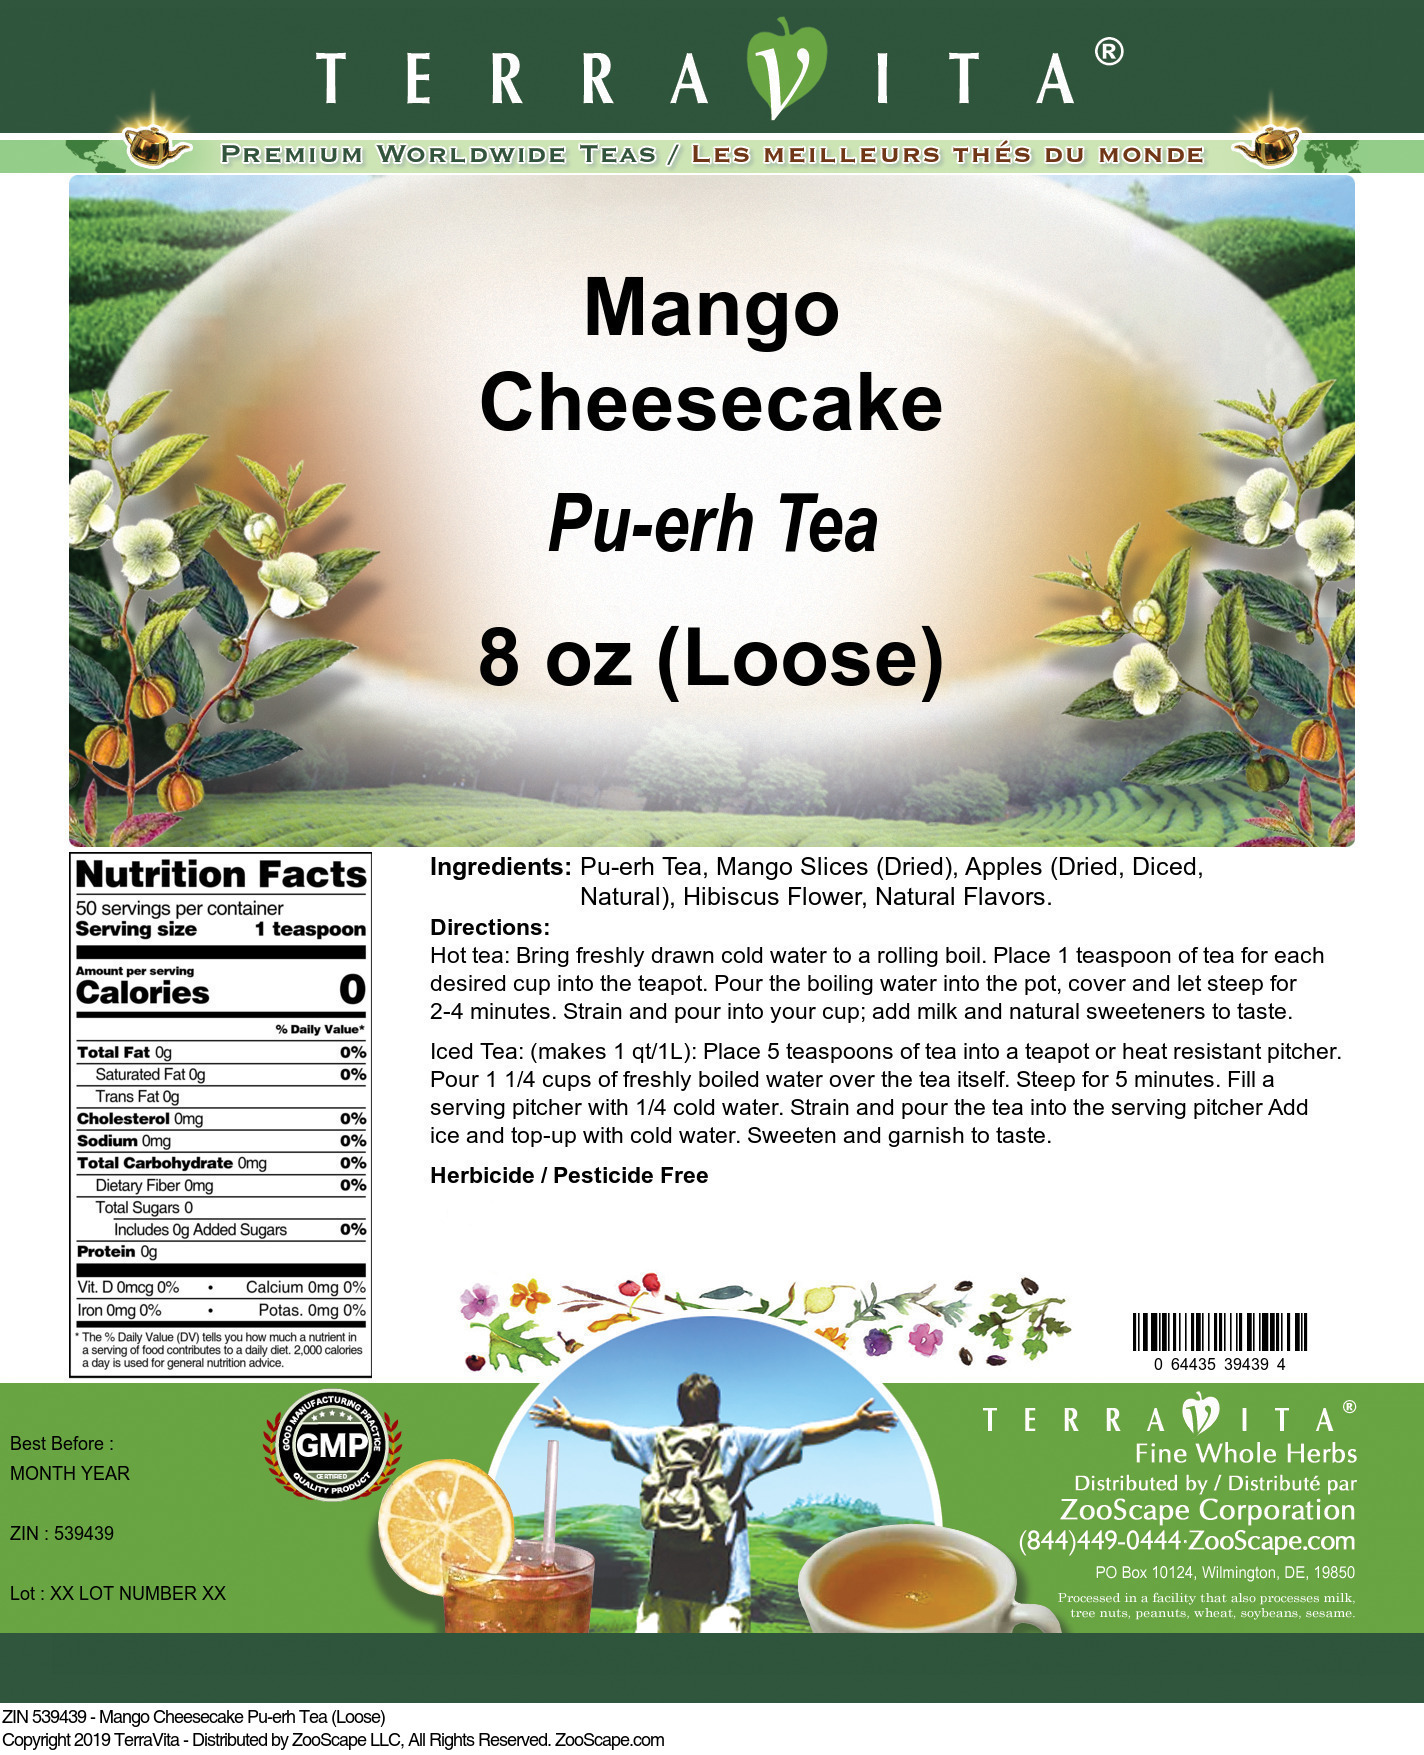 Mango Cheesecake Pu-erh Tea (Loose) - Label